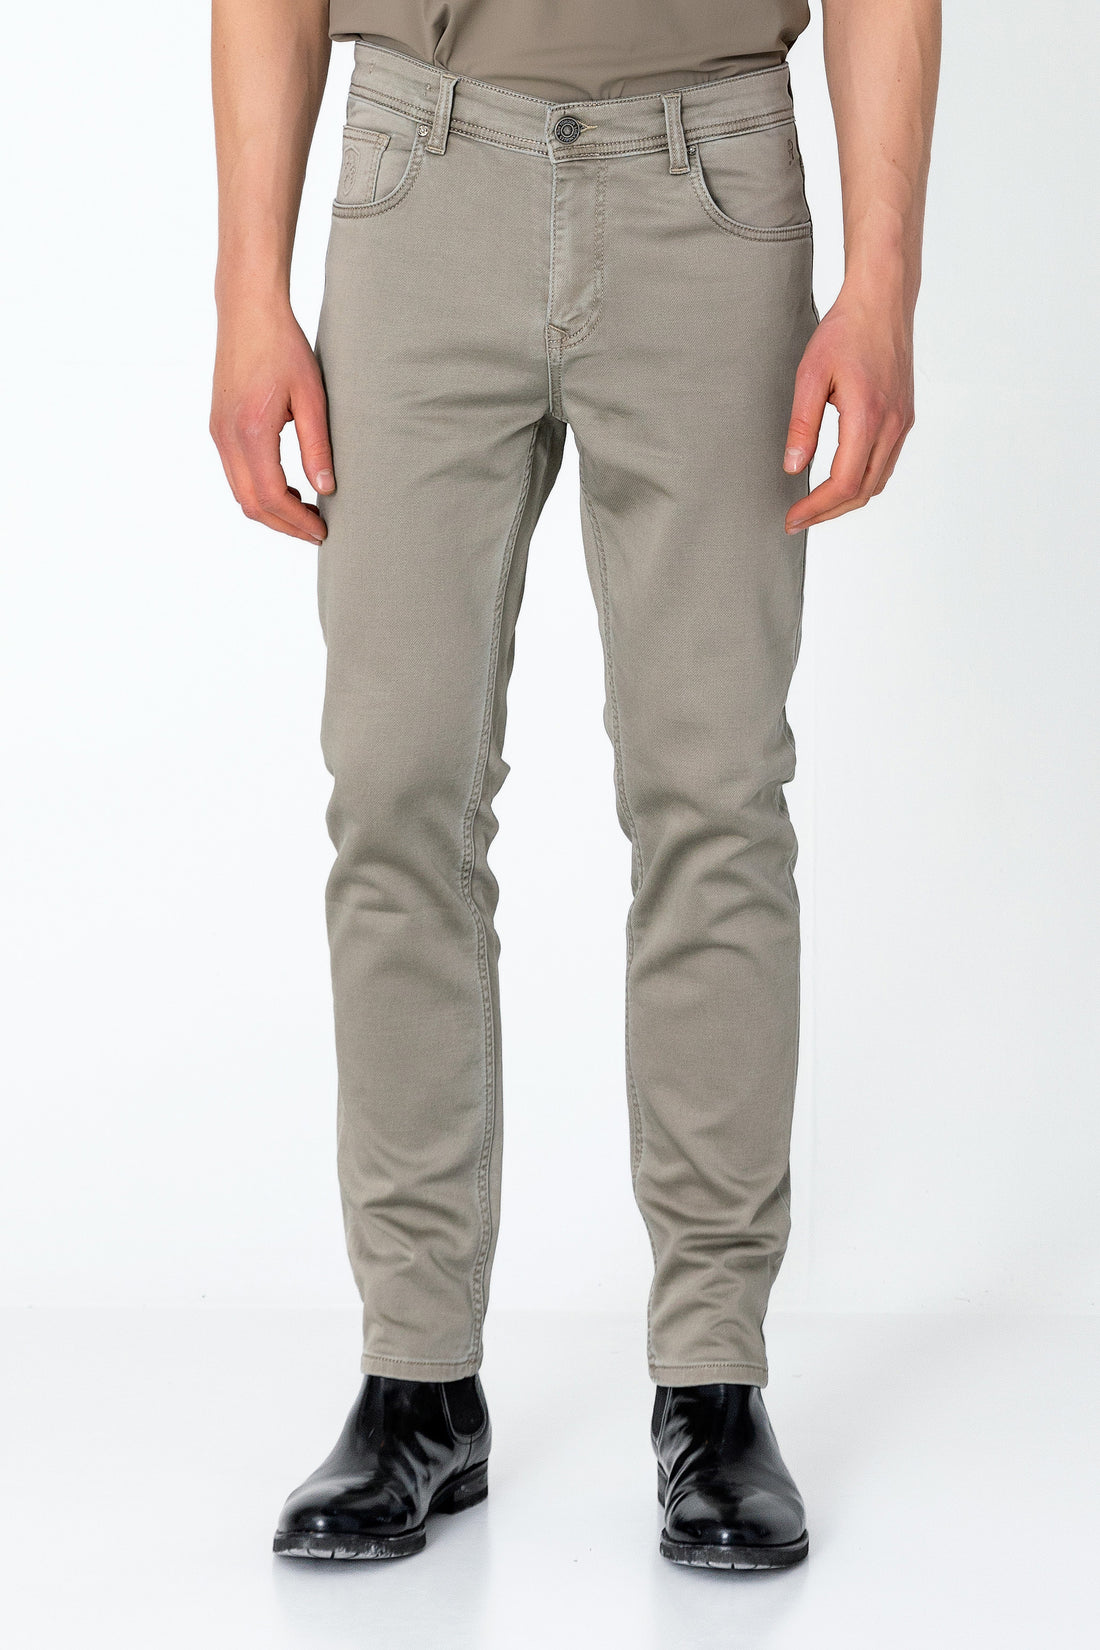 Super Soft 5-pocket Style Pants - Stone